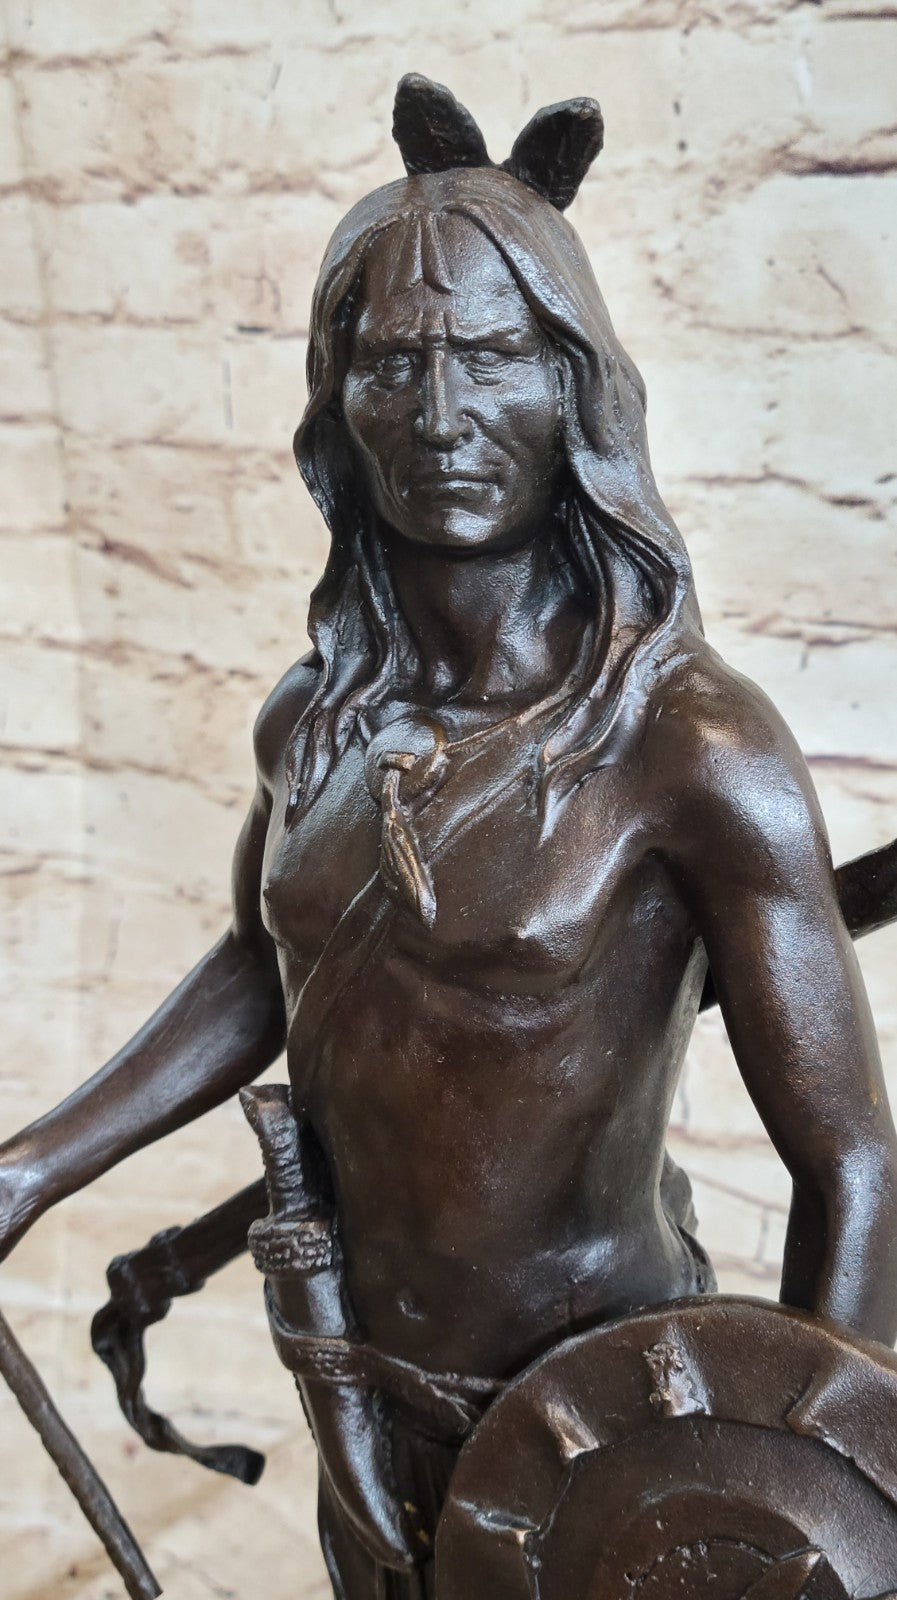 Signed Native American Indian Warrior Bronze Sculpture Statue Figurine Art Deco